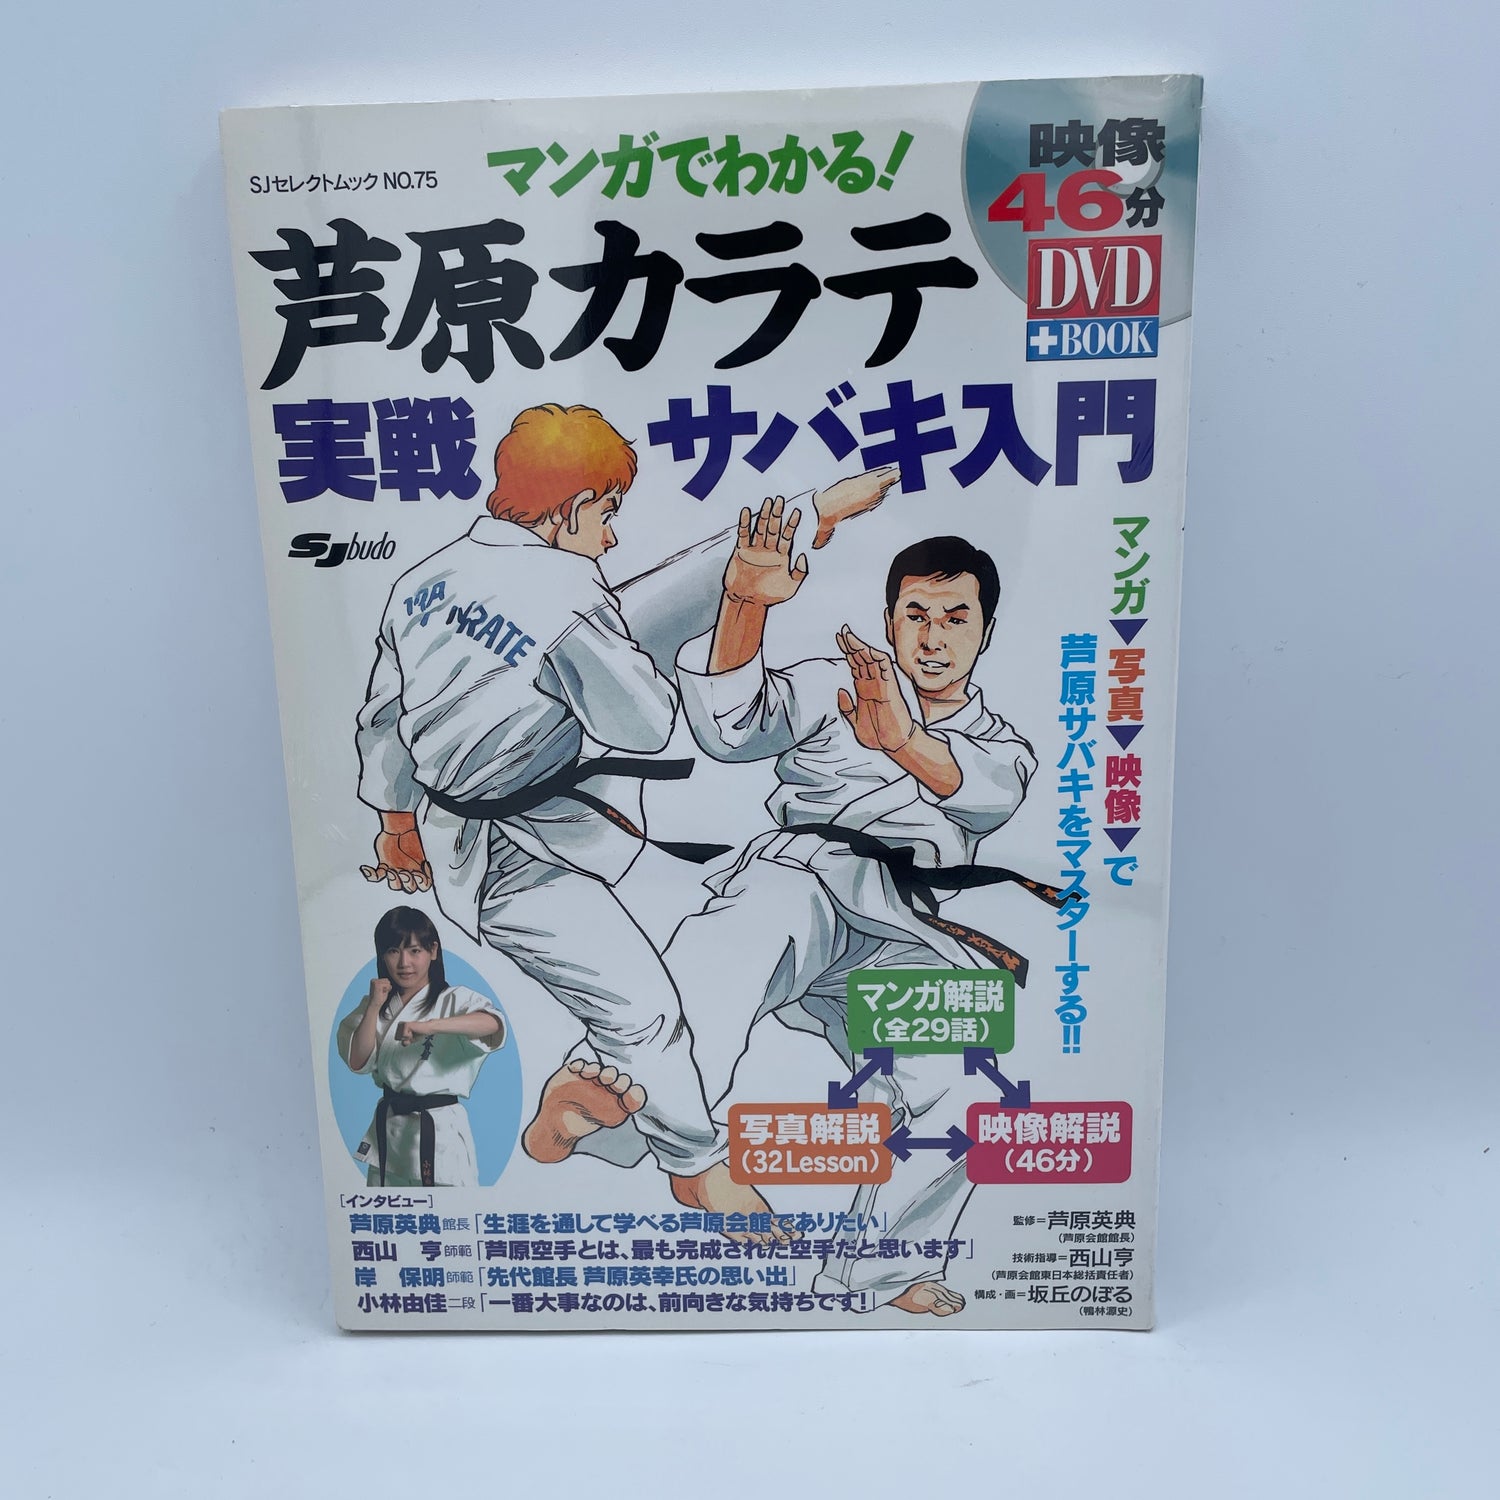 Ashihara Karate Introducción al libro y DVD de manga Sabaki de Hideyuki Ashihara (usado)